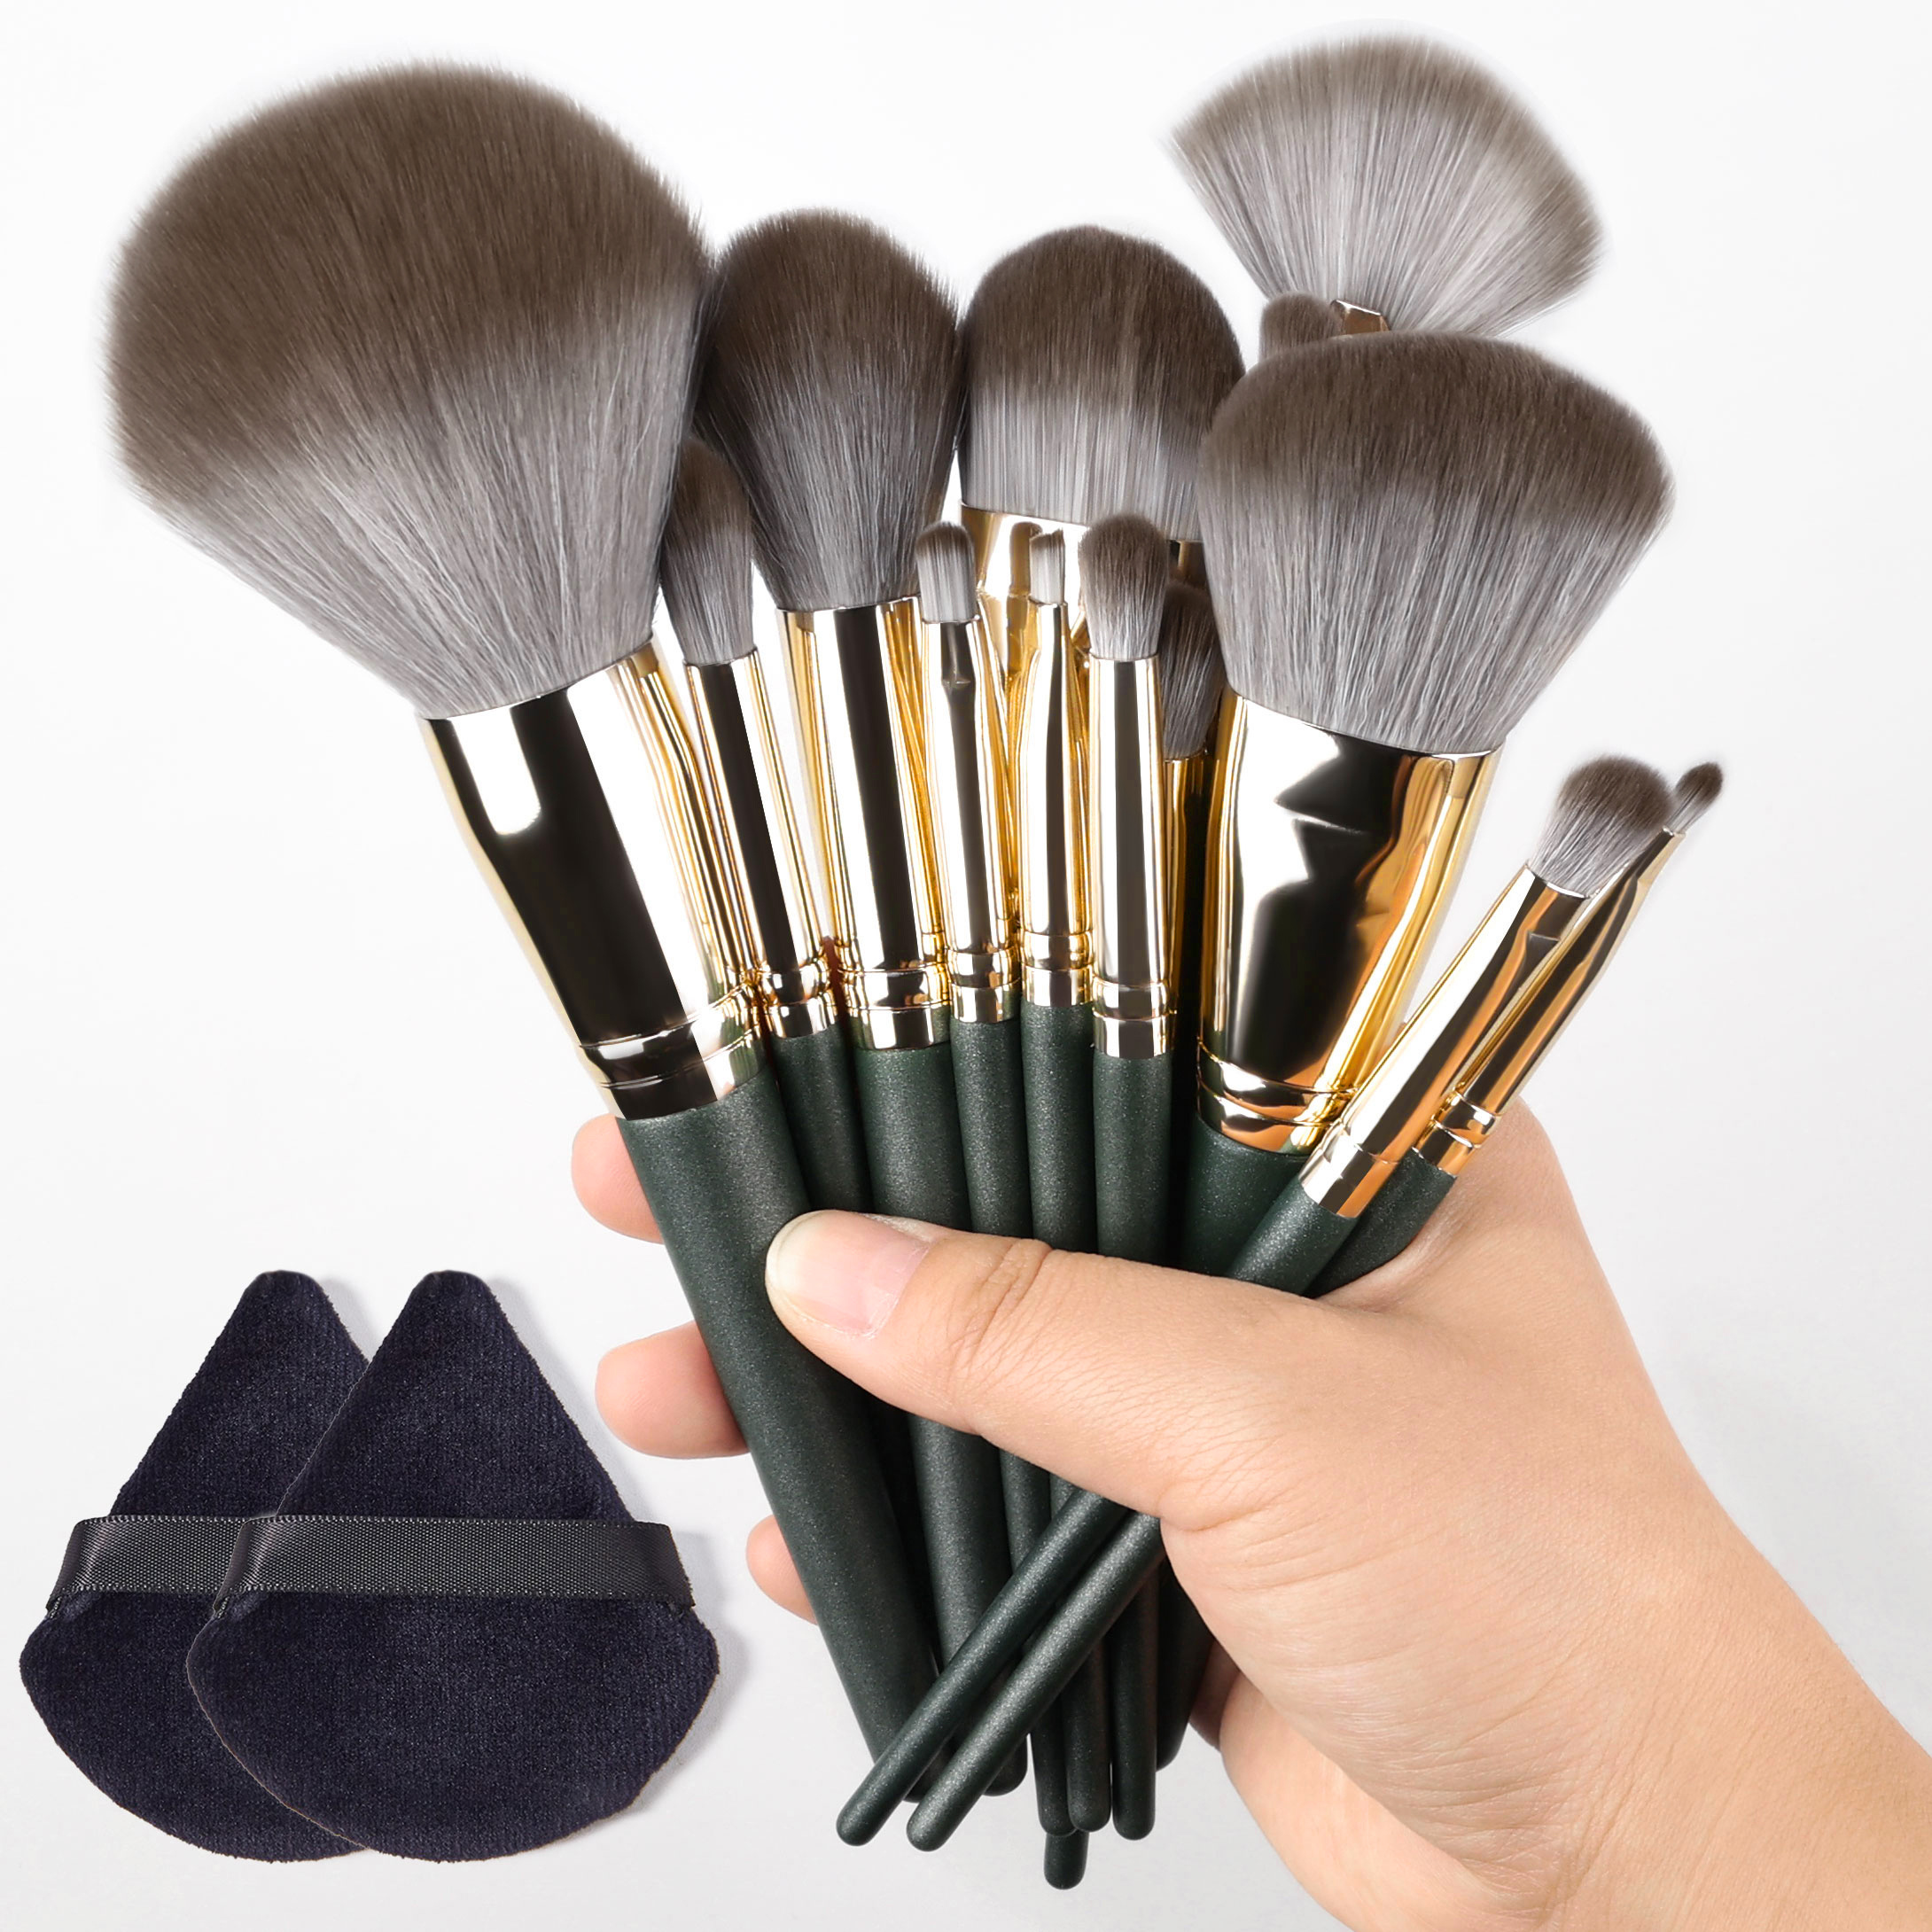 Makeup Brushes 8 Pieces Small Makeup Set Cosmetics Face Powder Foundation Eyeshadow Makeup Tool Travel Size Denim Brush Makeup Brush Kits for